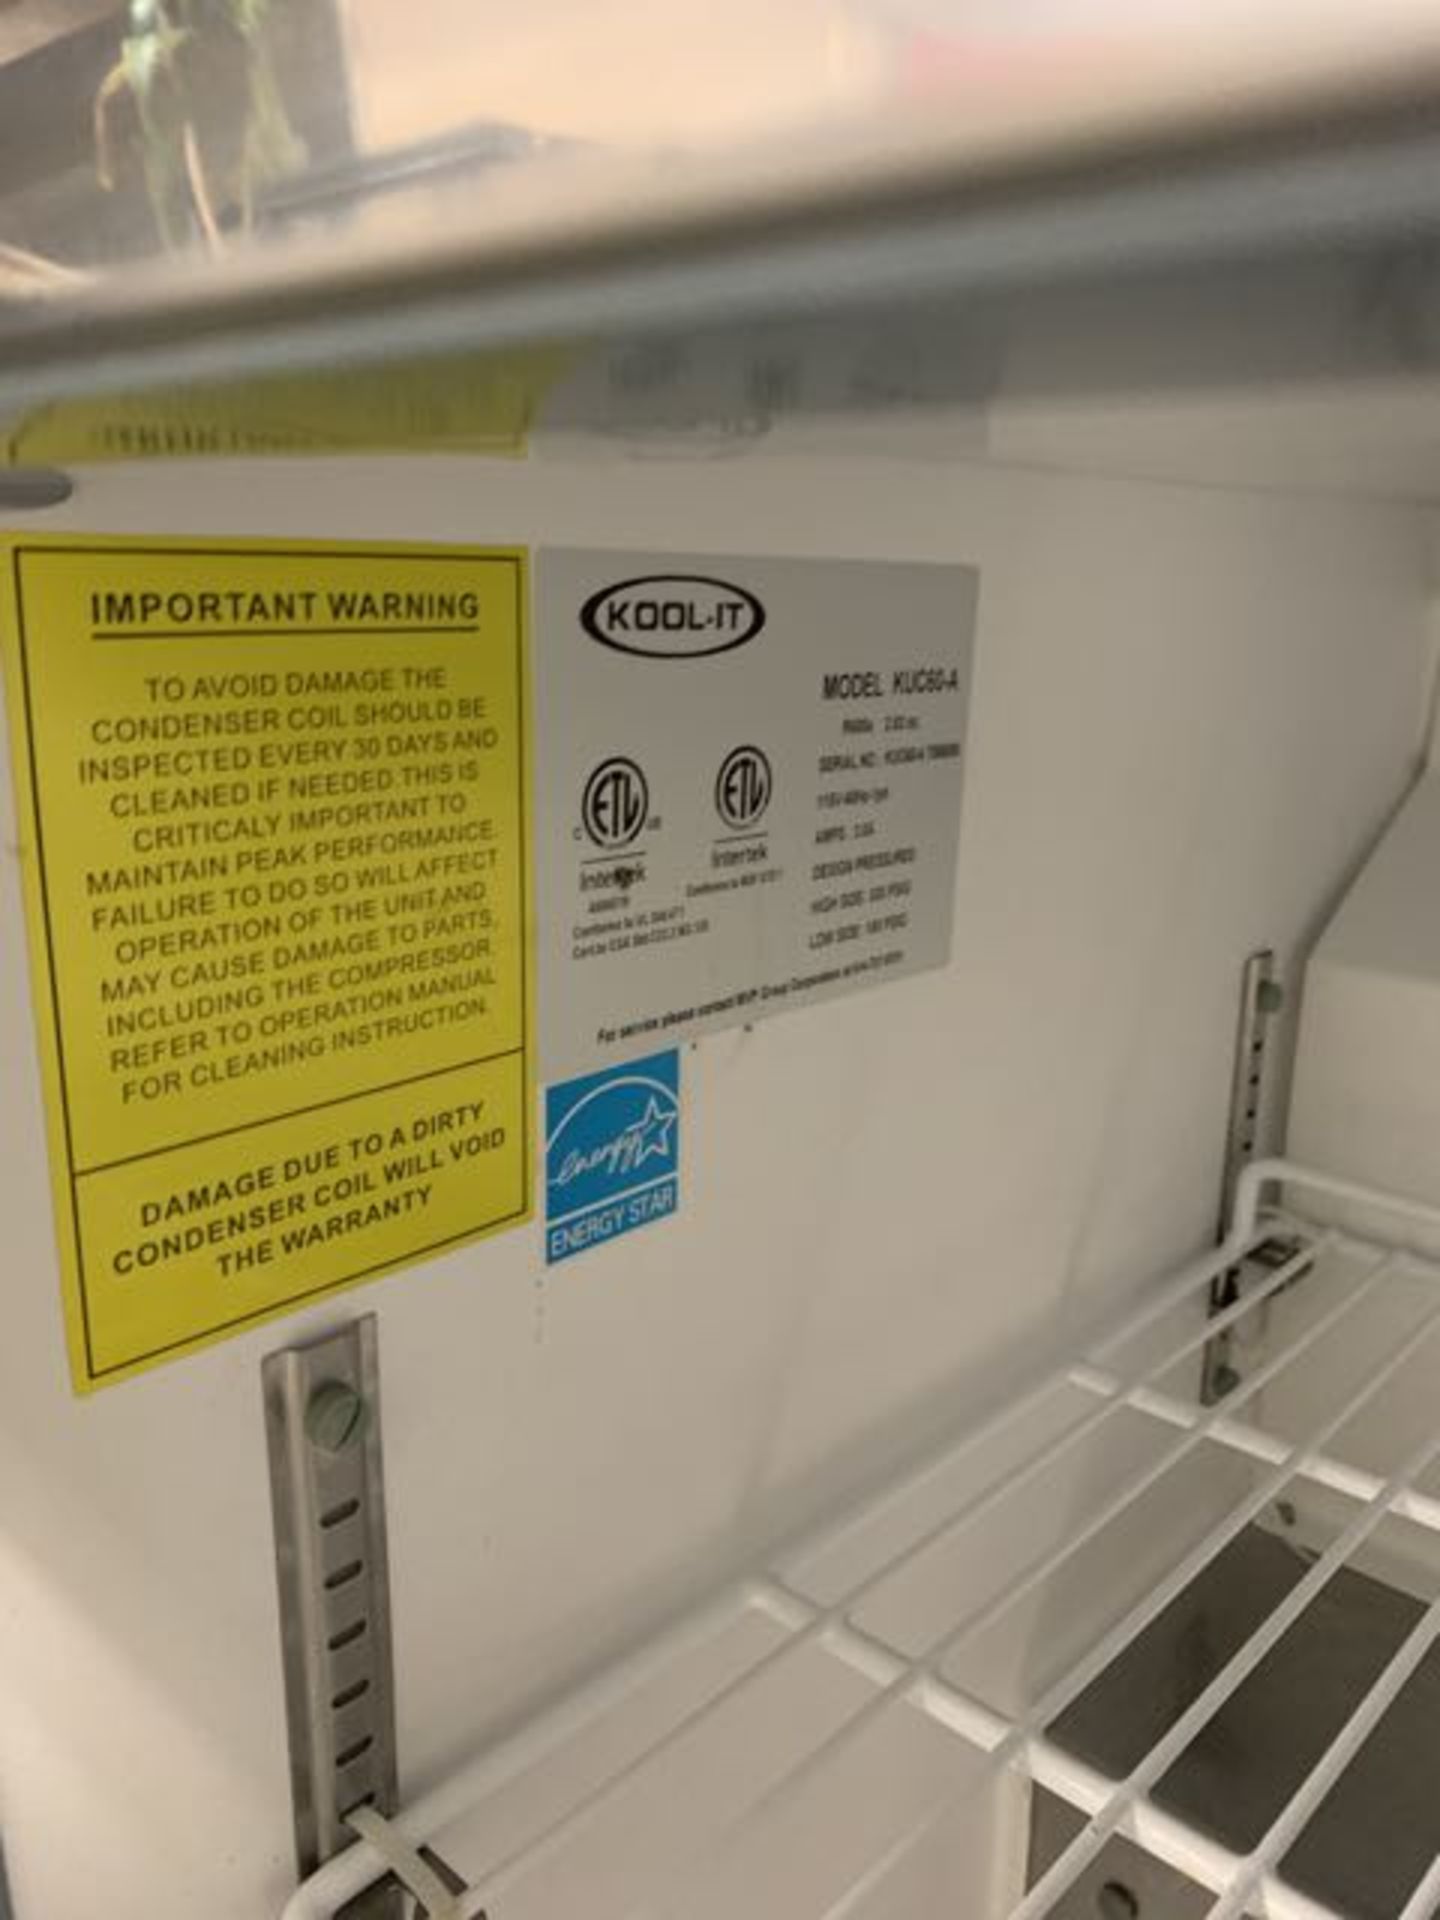 Réfrigérateur KOOL IT , 2portes, sous comptoir IKON series # KUC 60A-1A - 60 x 30" - Image 3 of 3